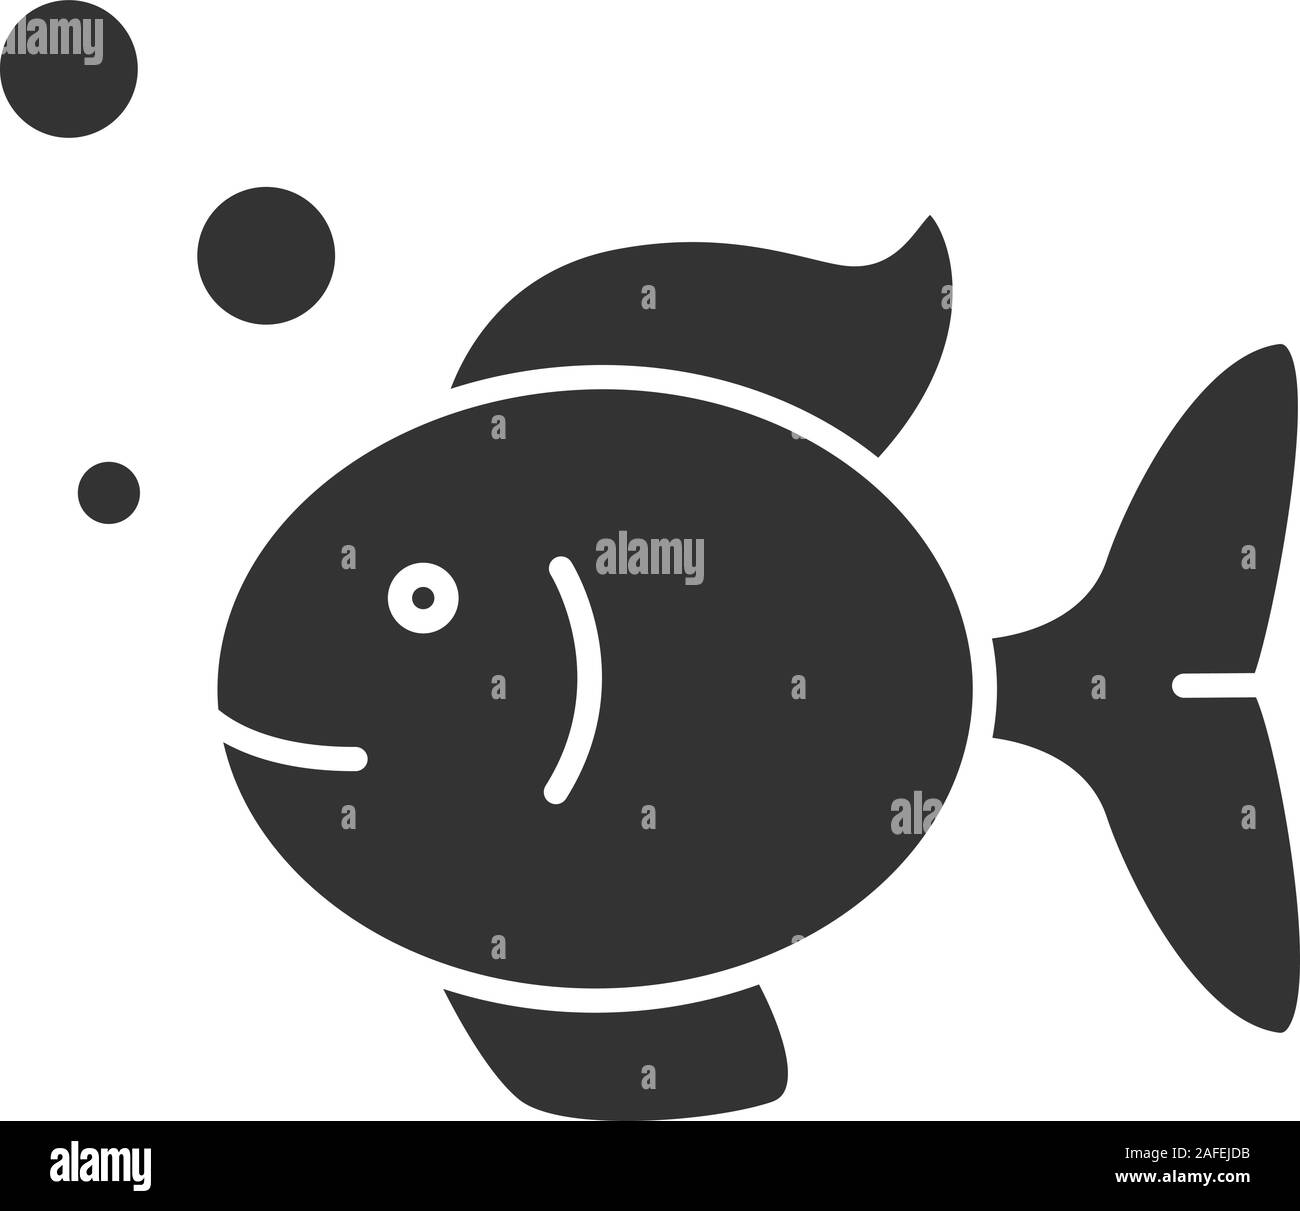 Aquarium fish glyph icon. Fishkeeping. Fishbowl pet. Silhouette symbol. Negative space. Vector isolated illustration Stock Vector